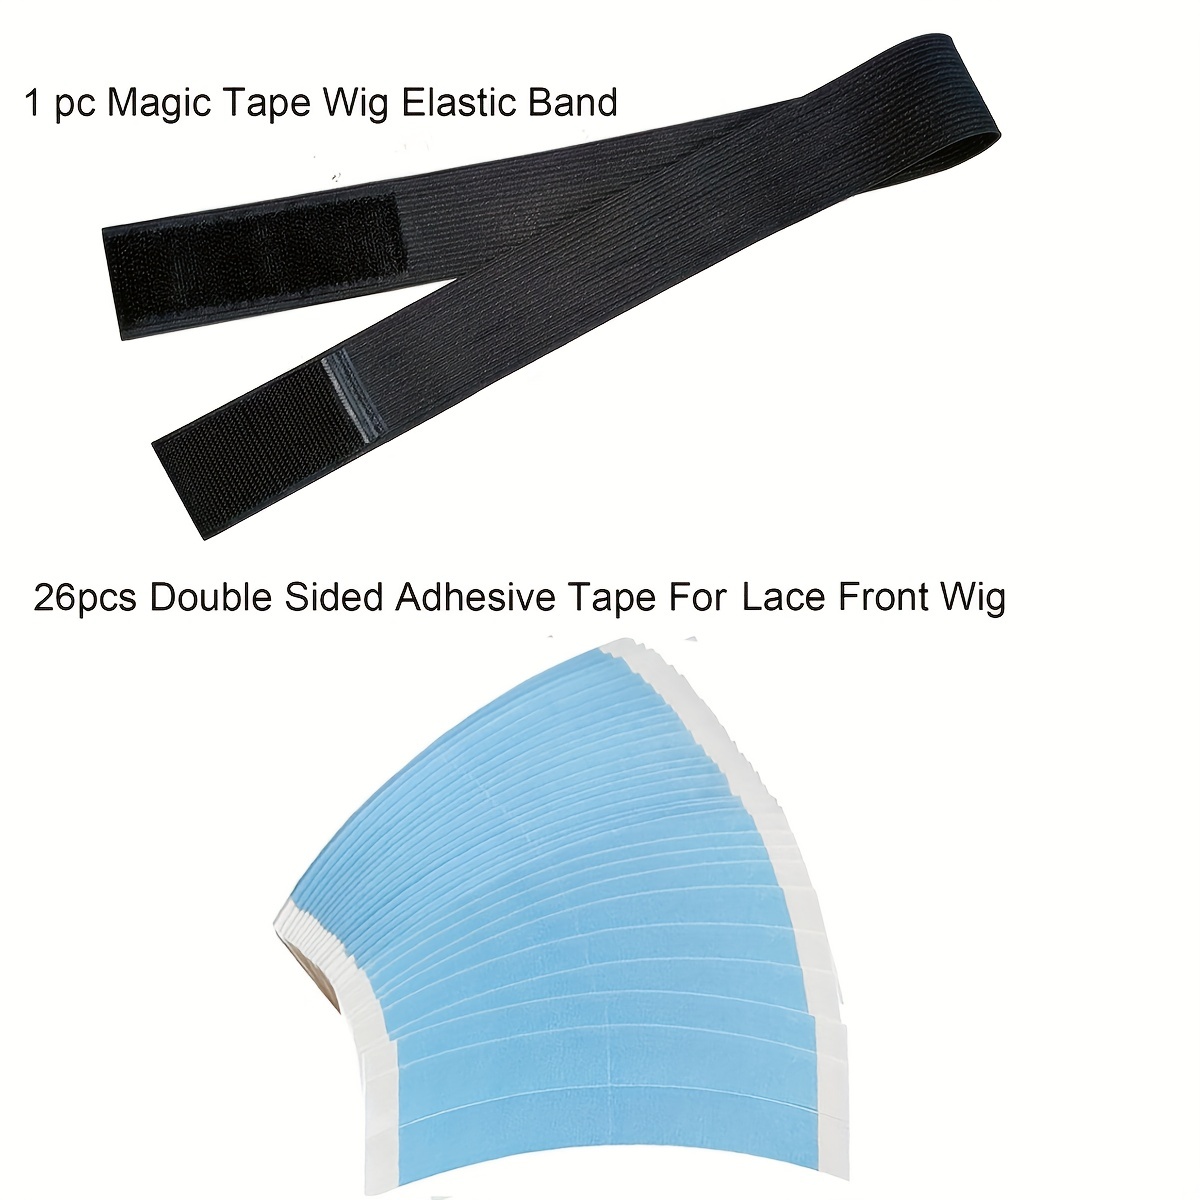 Magic Tape Wig Elastic Band